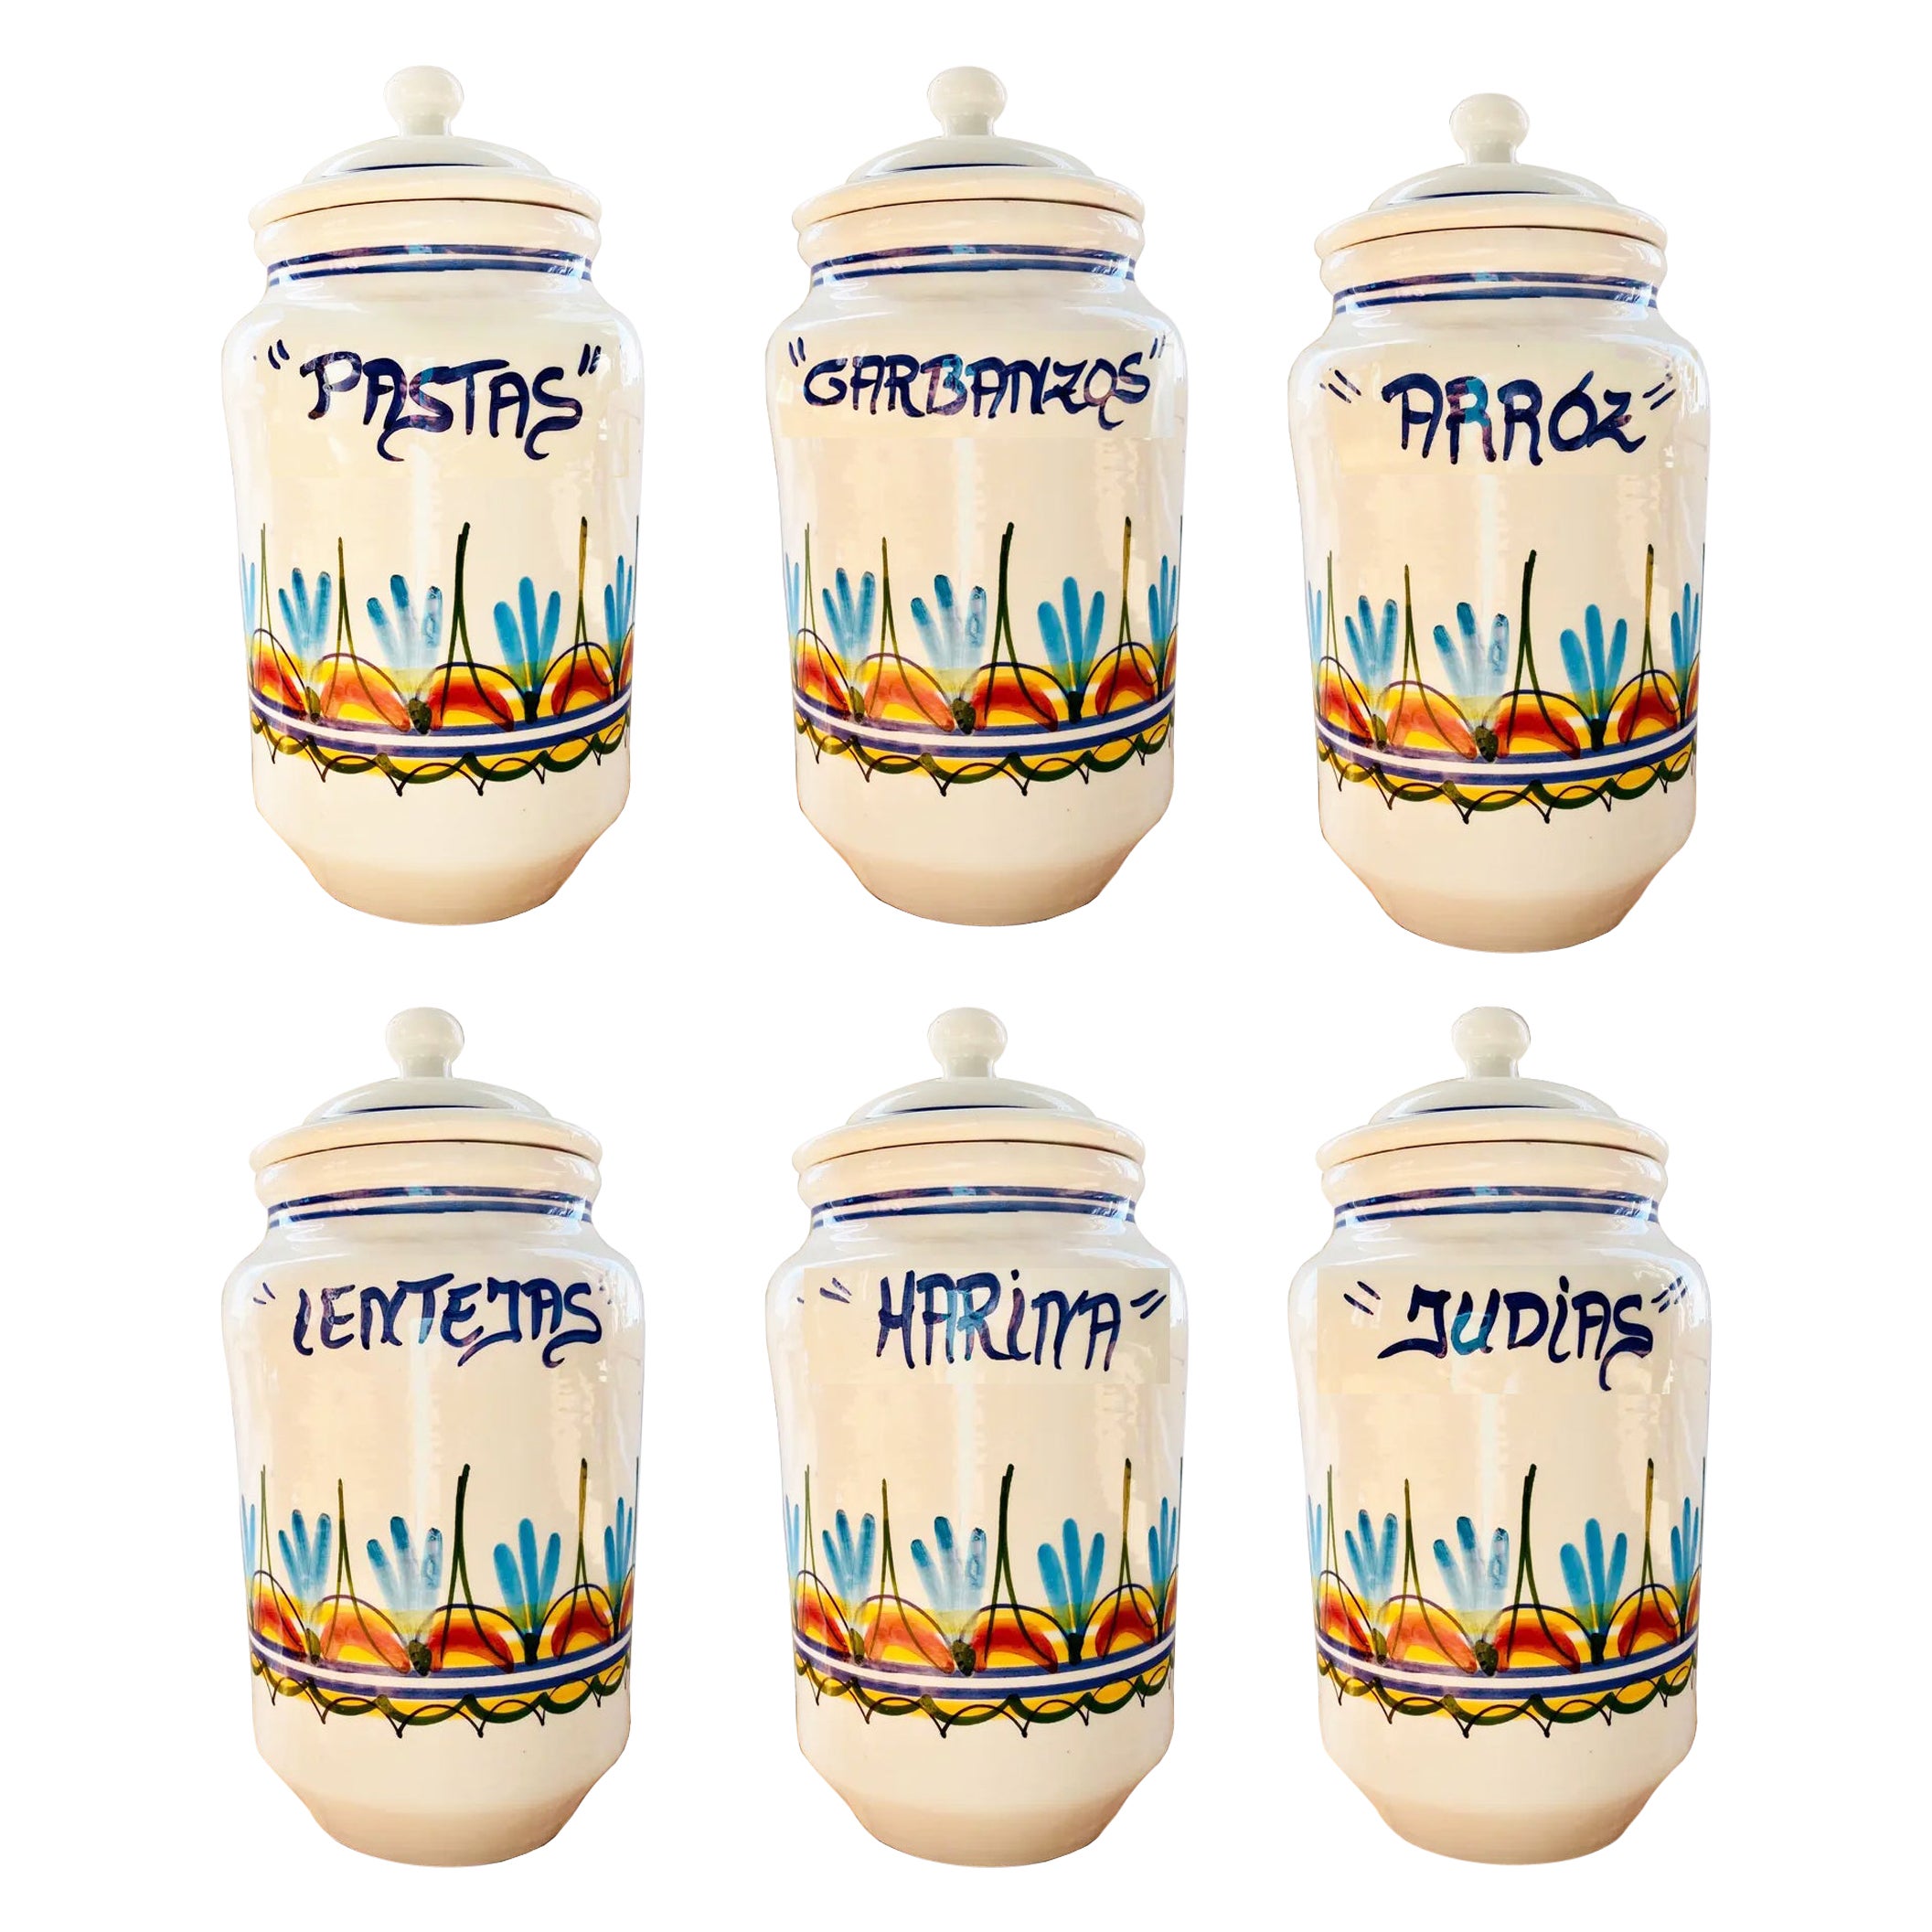 6 ceramic vintage kitchen jars

Hand painted
Spanish crafts.